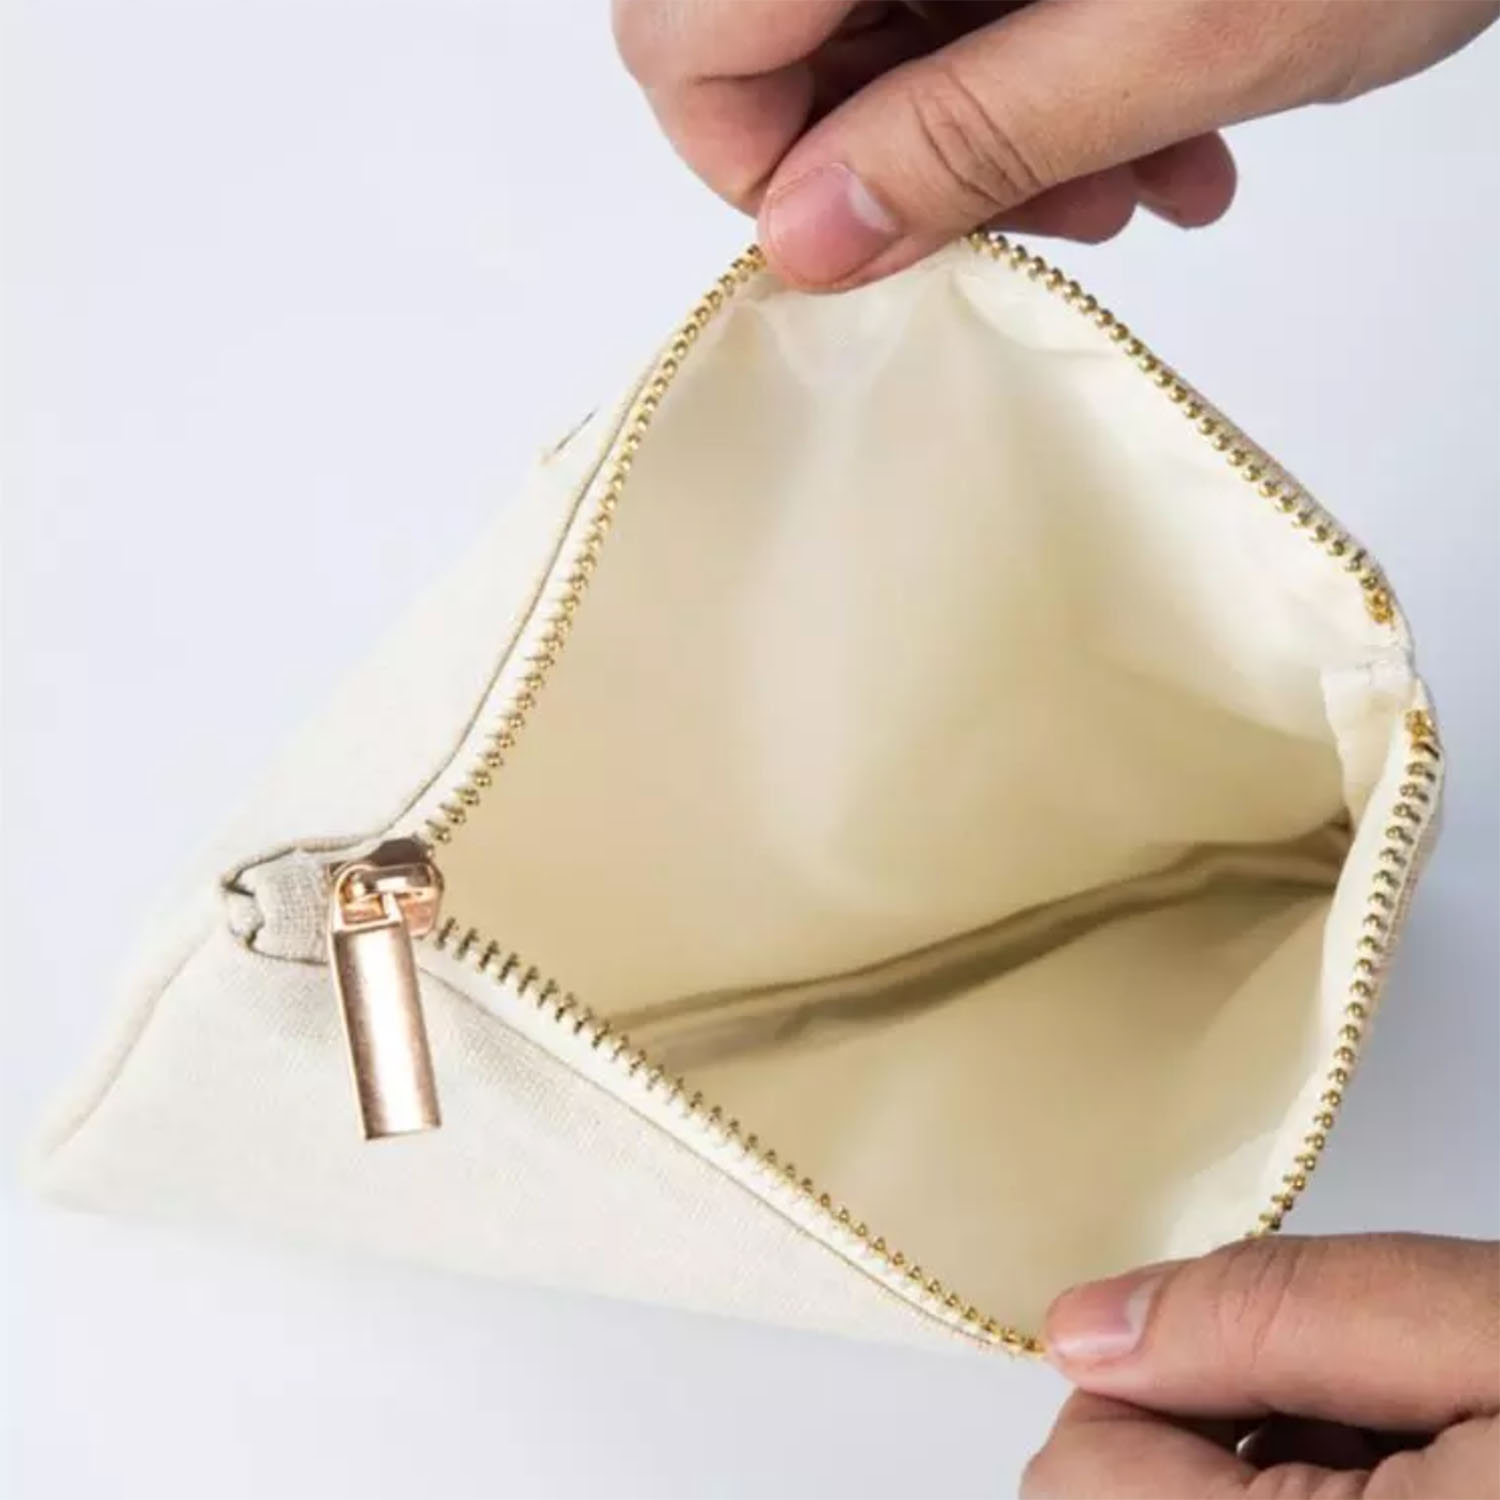 Bag Zippers - Emmaline Bags Inc.